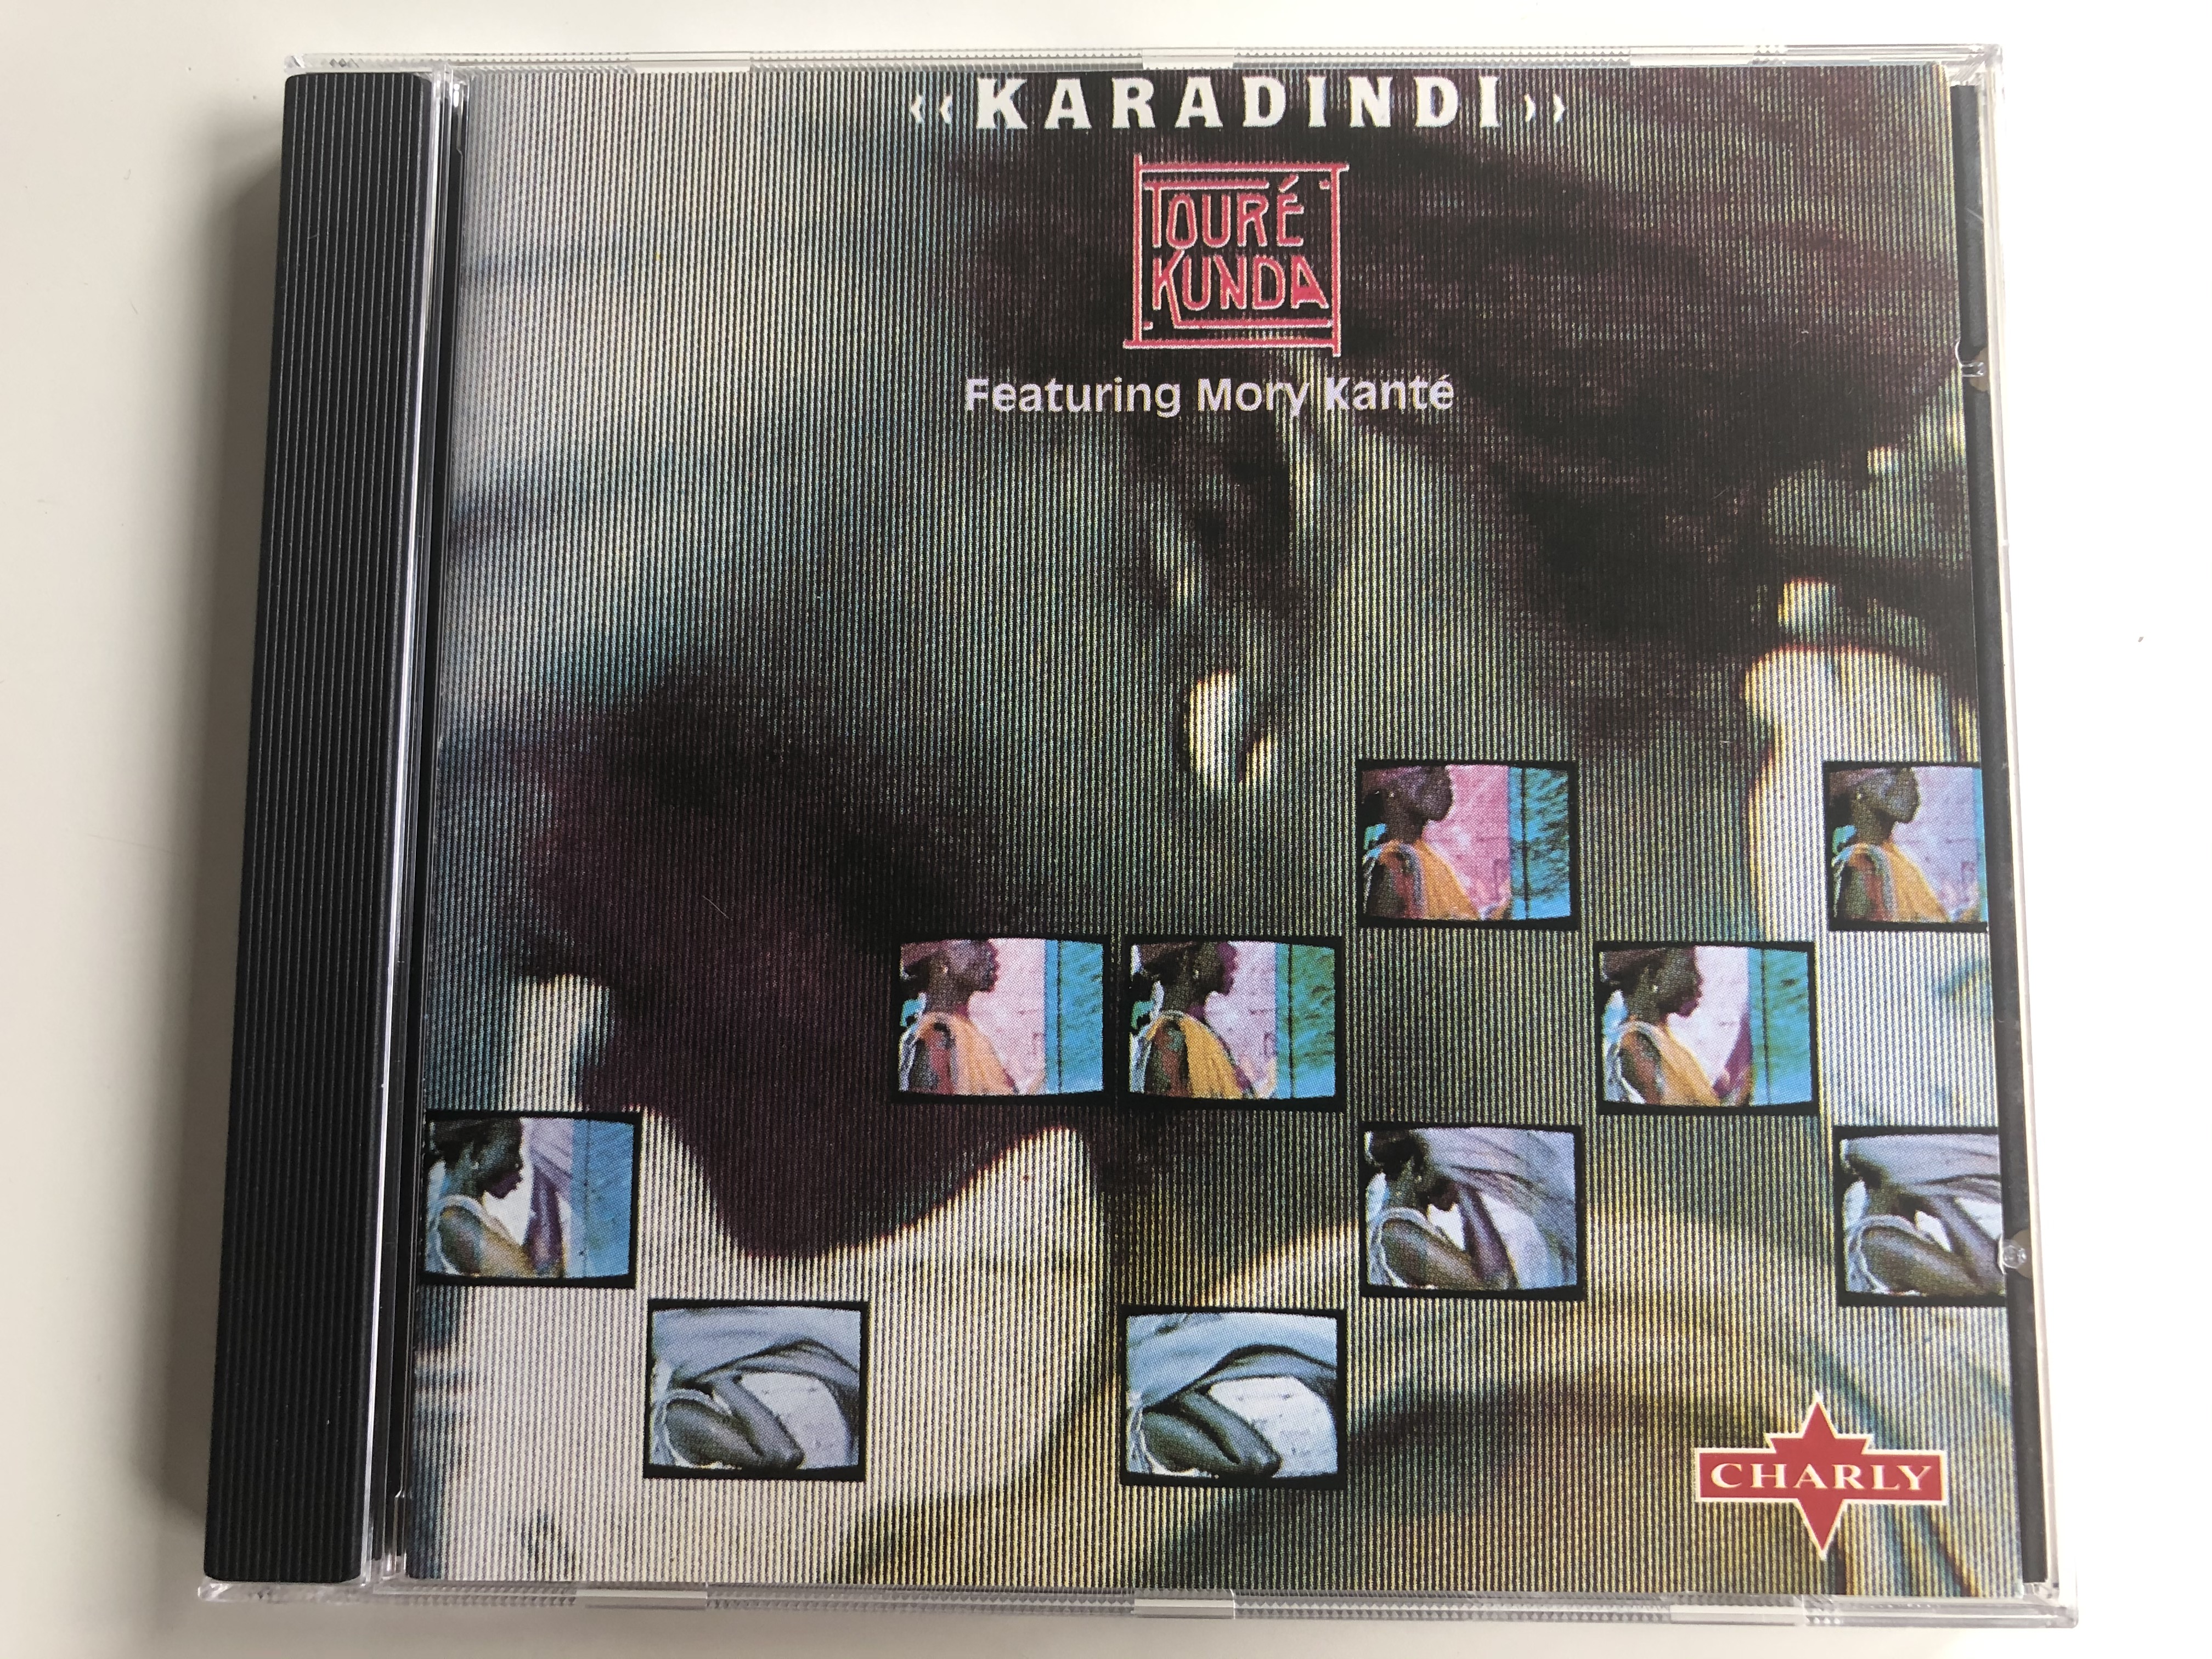 -karadindi-tour-kunda-featuring-mory-kante-charly-records-audio-cd-1997-cpcd-8298-1-.jpg